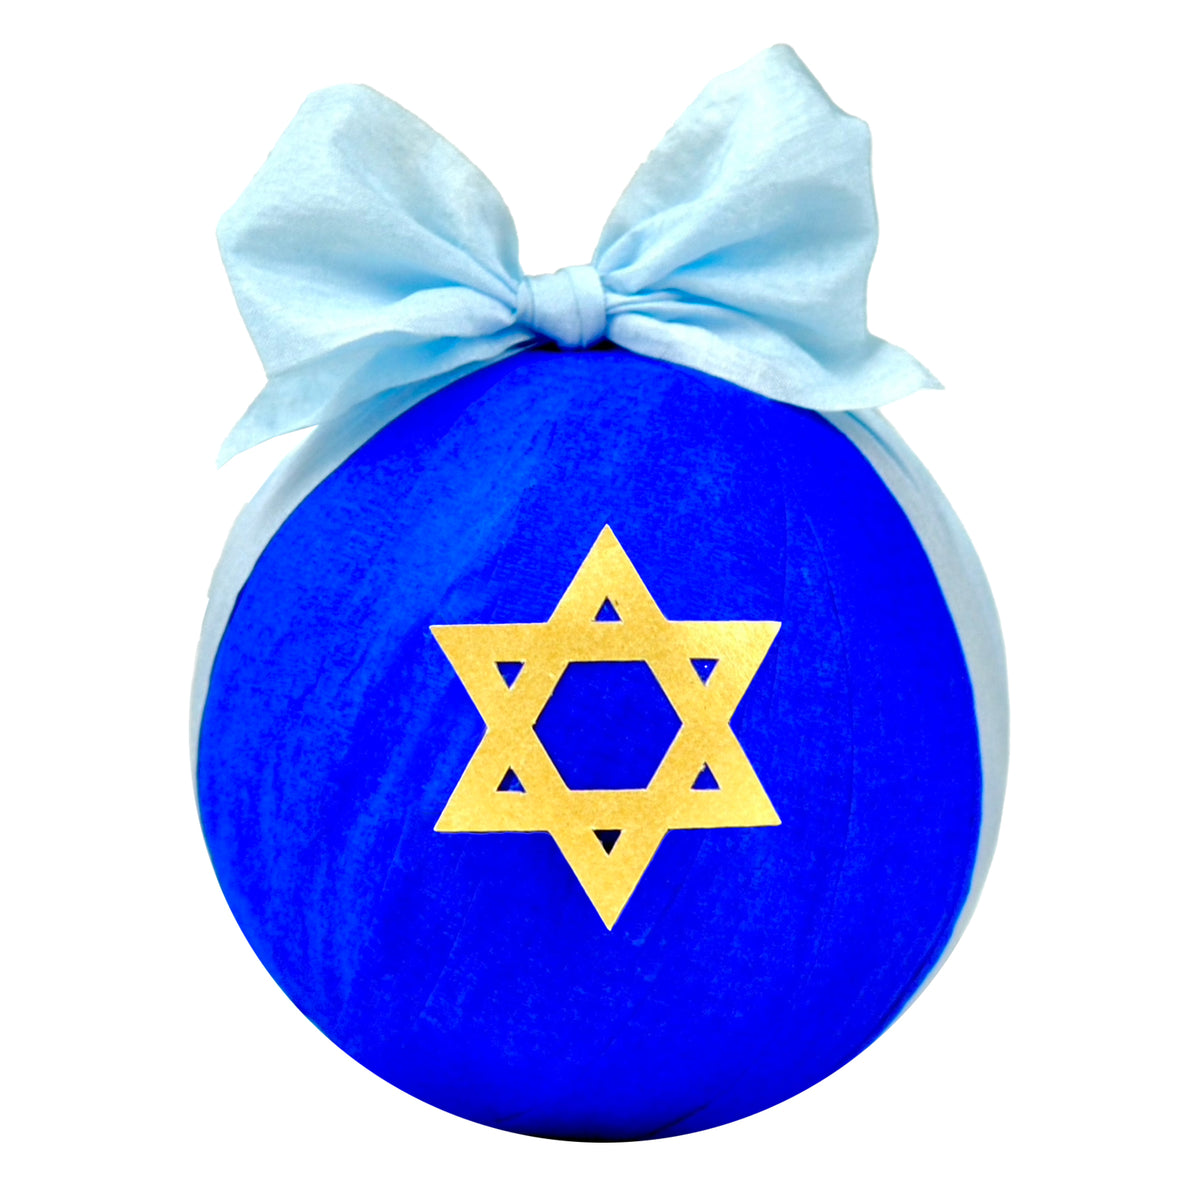 Deluxe Surprise Ball Hanukkah